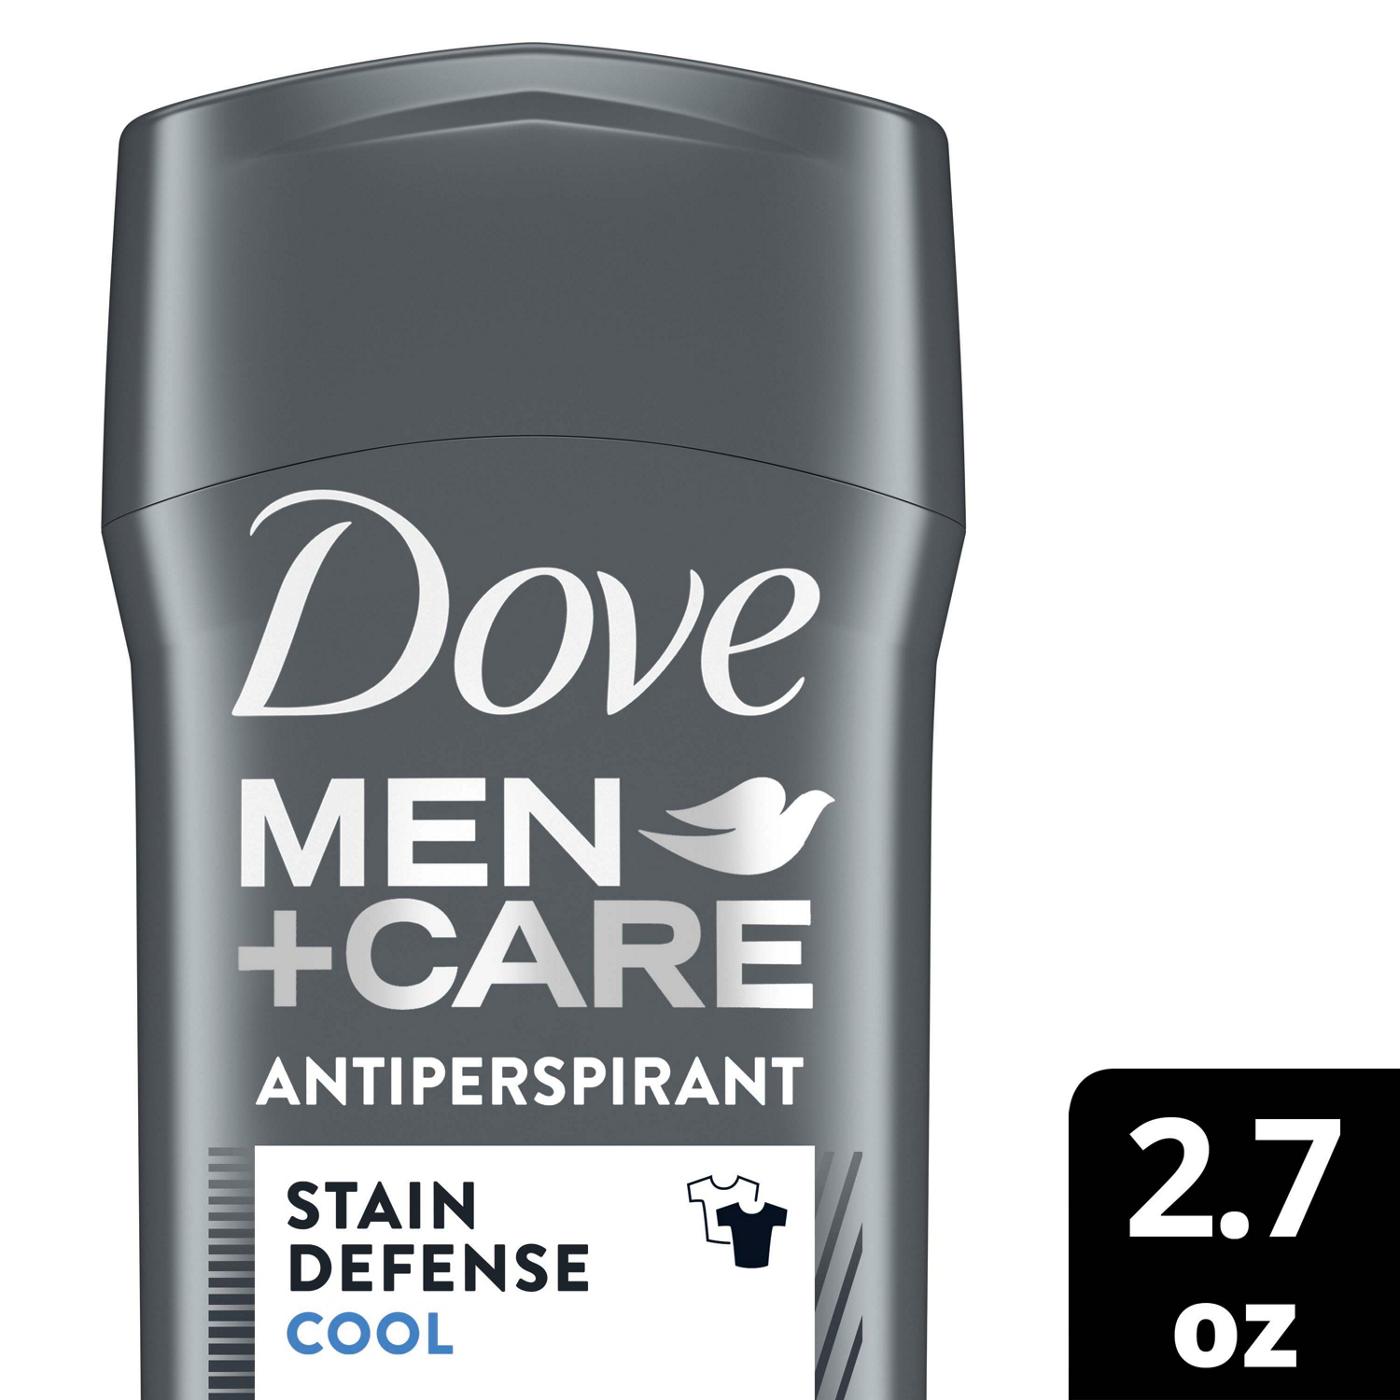 Dove Men+Care Antiperspirant Deodorant Stain Defense Cool; image 2 of 3